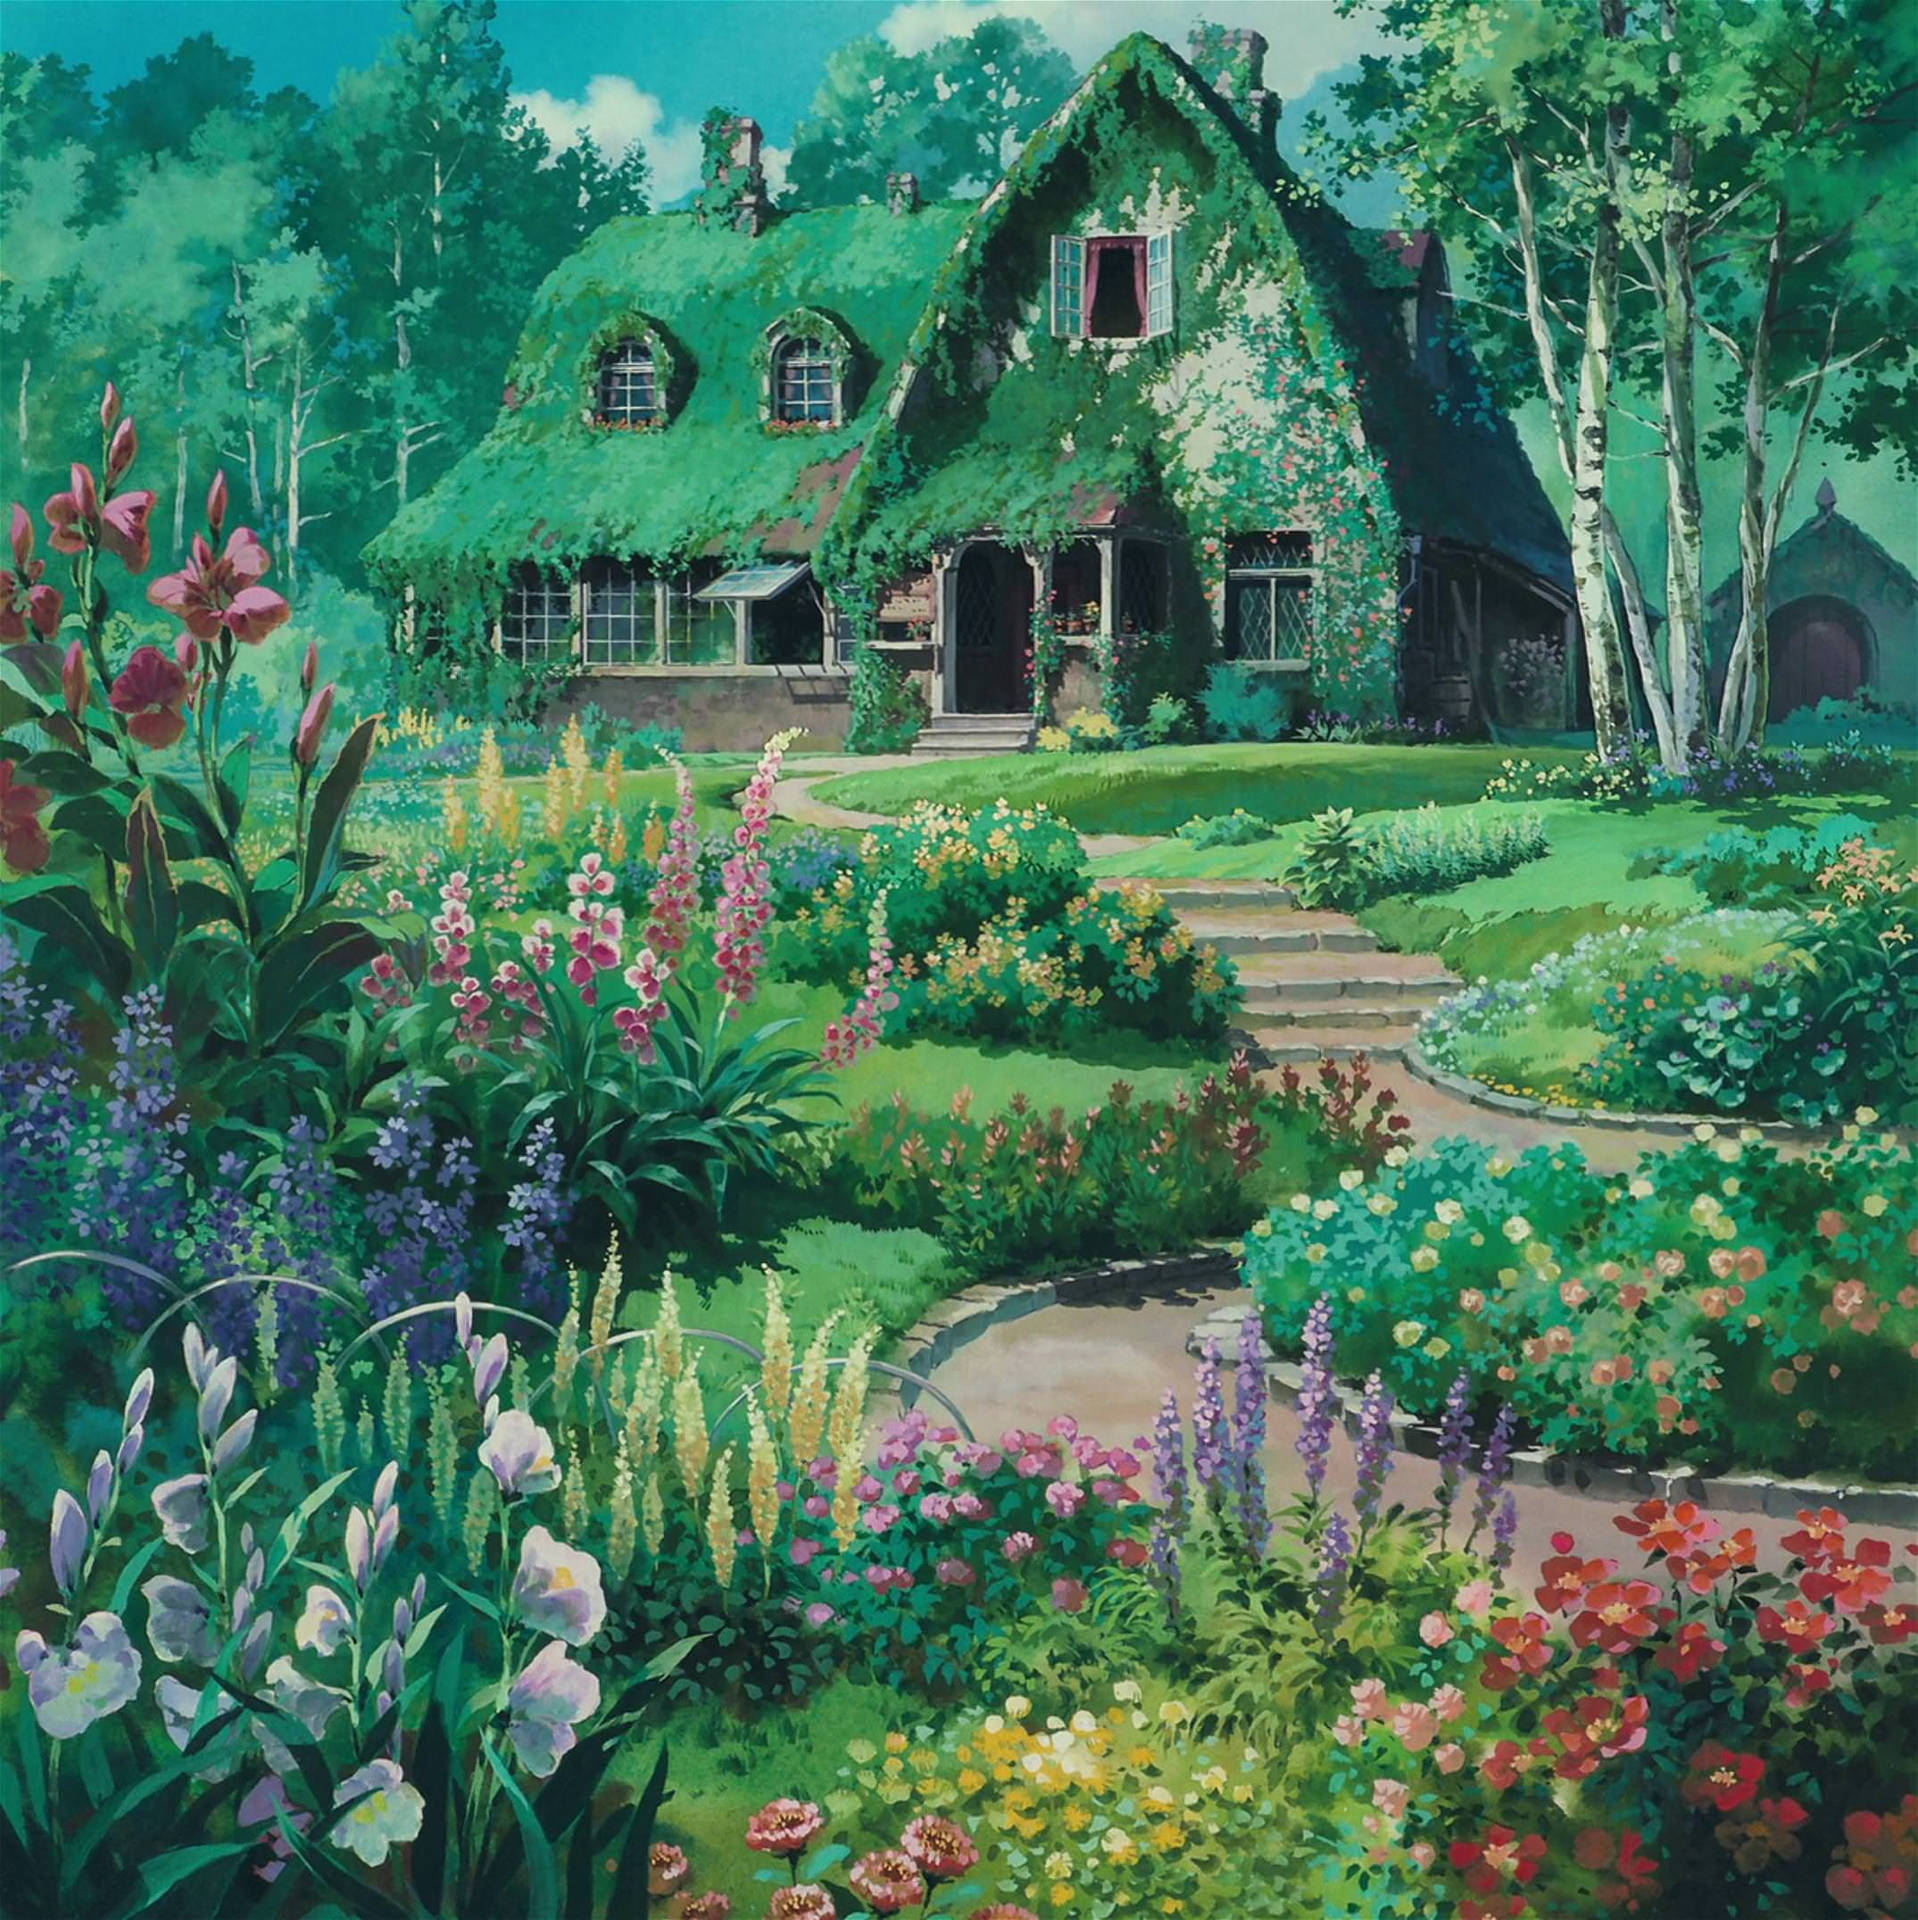 Studio Ghibli Scenery House With Garden